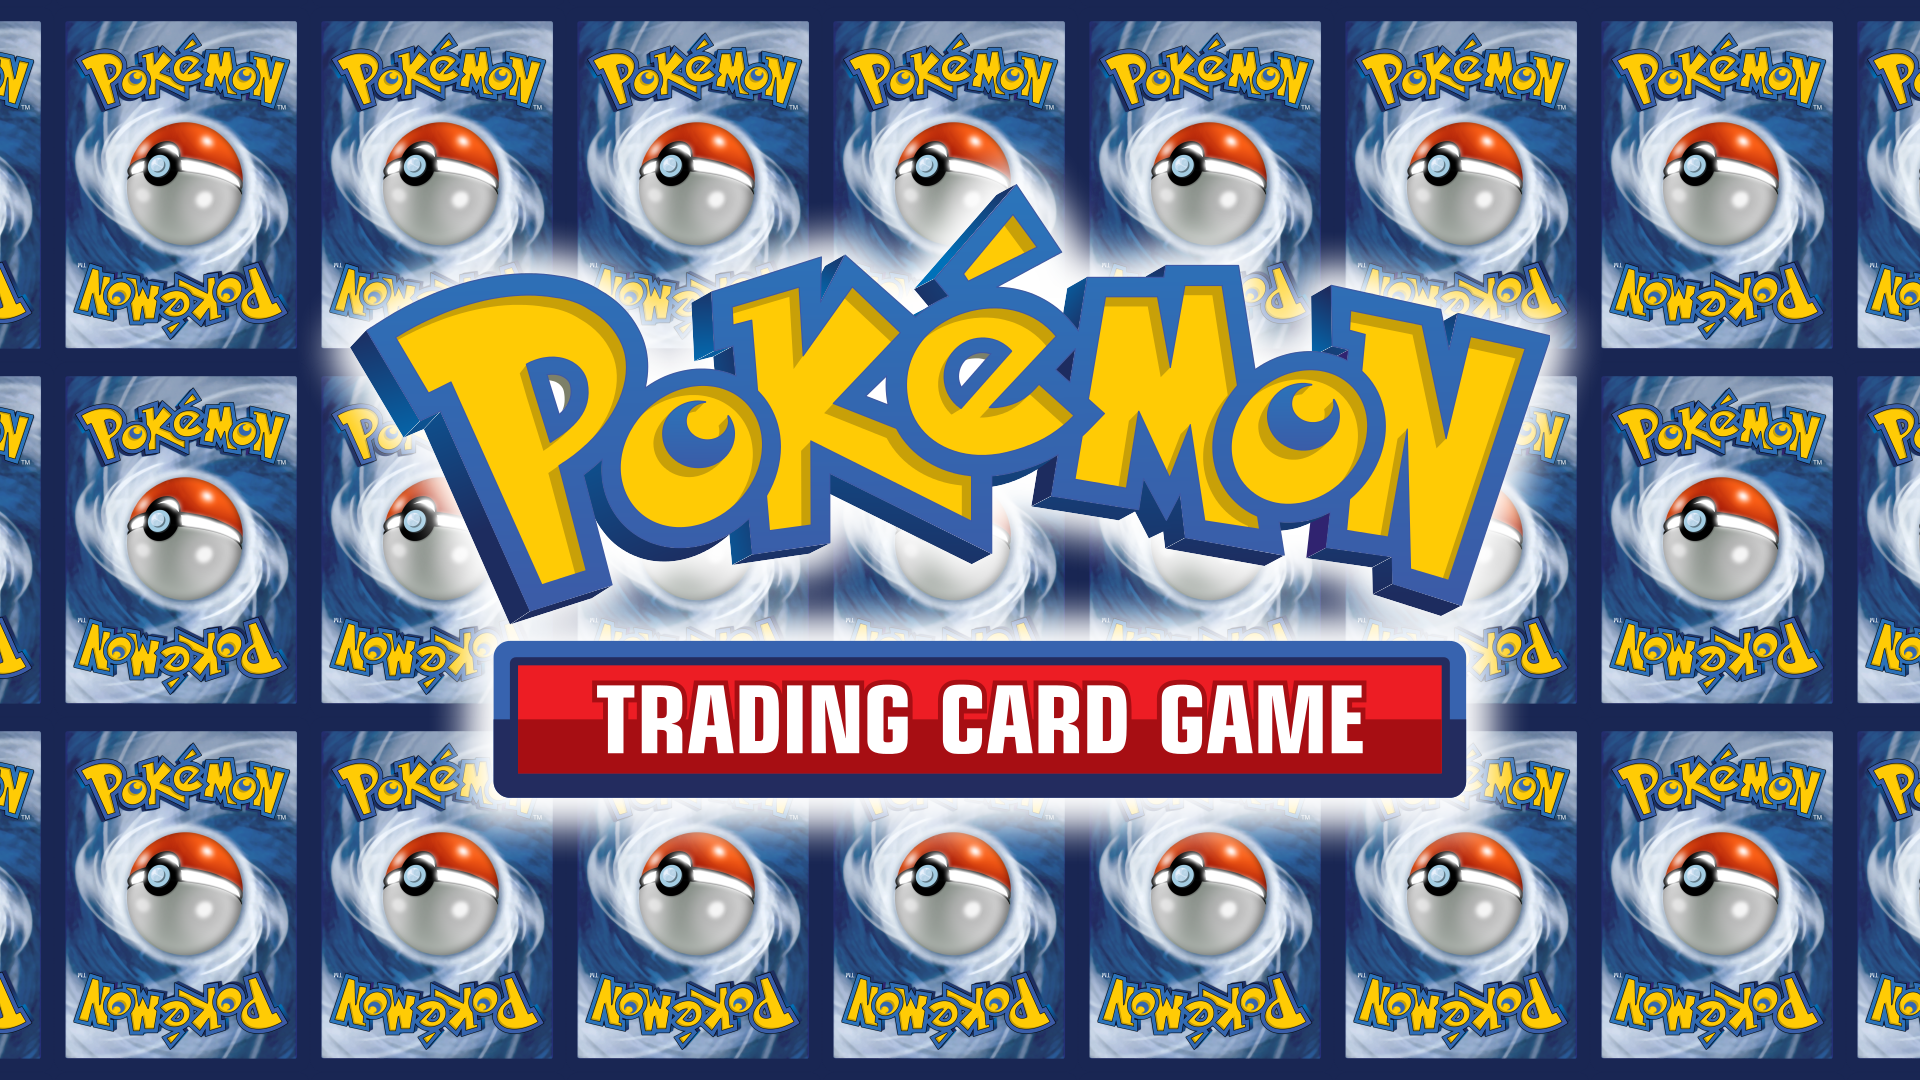 Pokémon Trading Card Game Details - LaunchBox Games Database